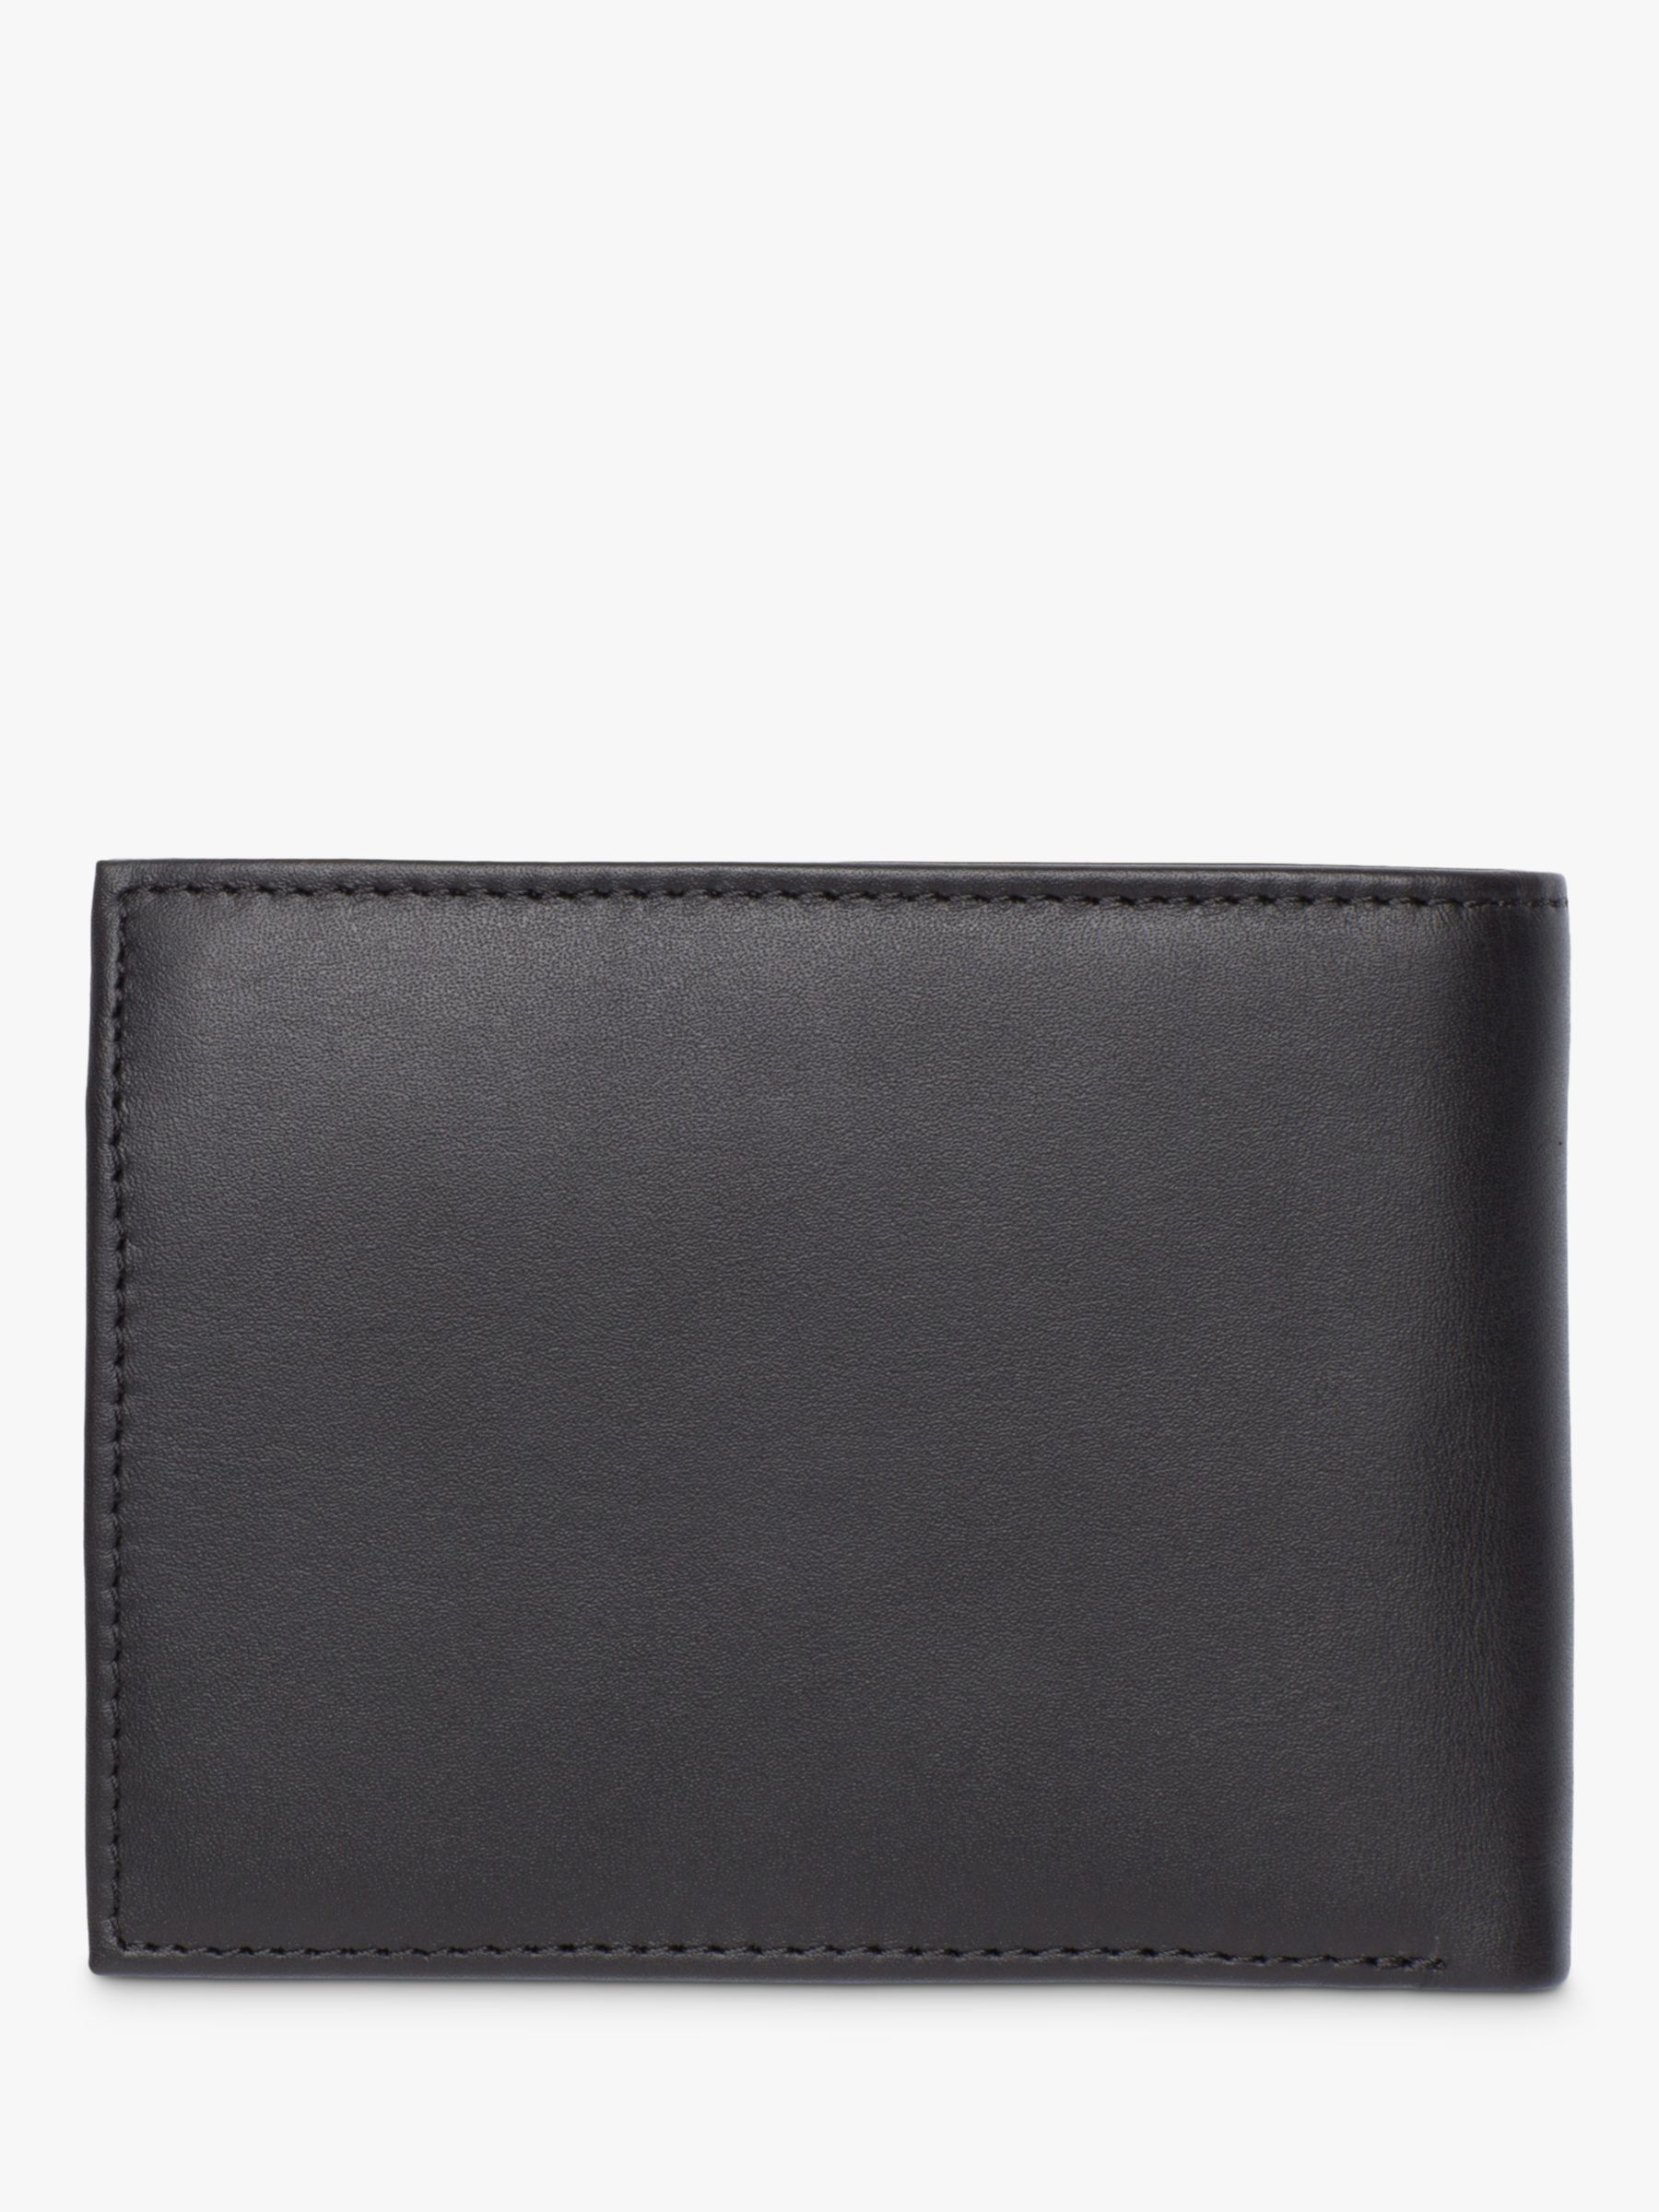 Tommy Hilfiger Eton Leather Flap Coin Wallet, Black